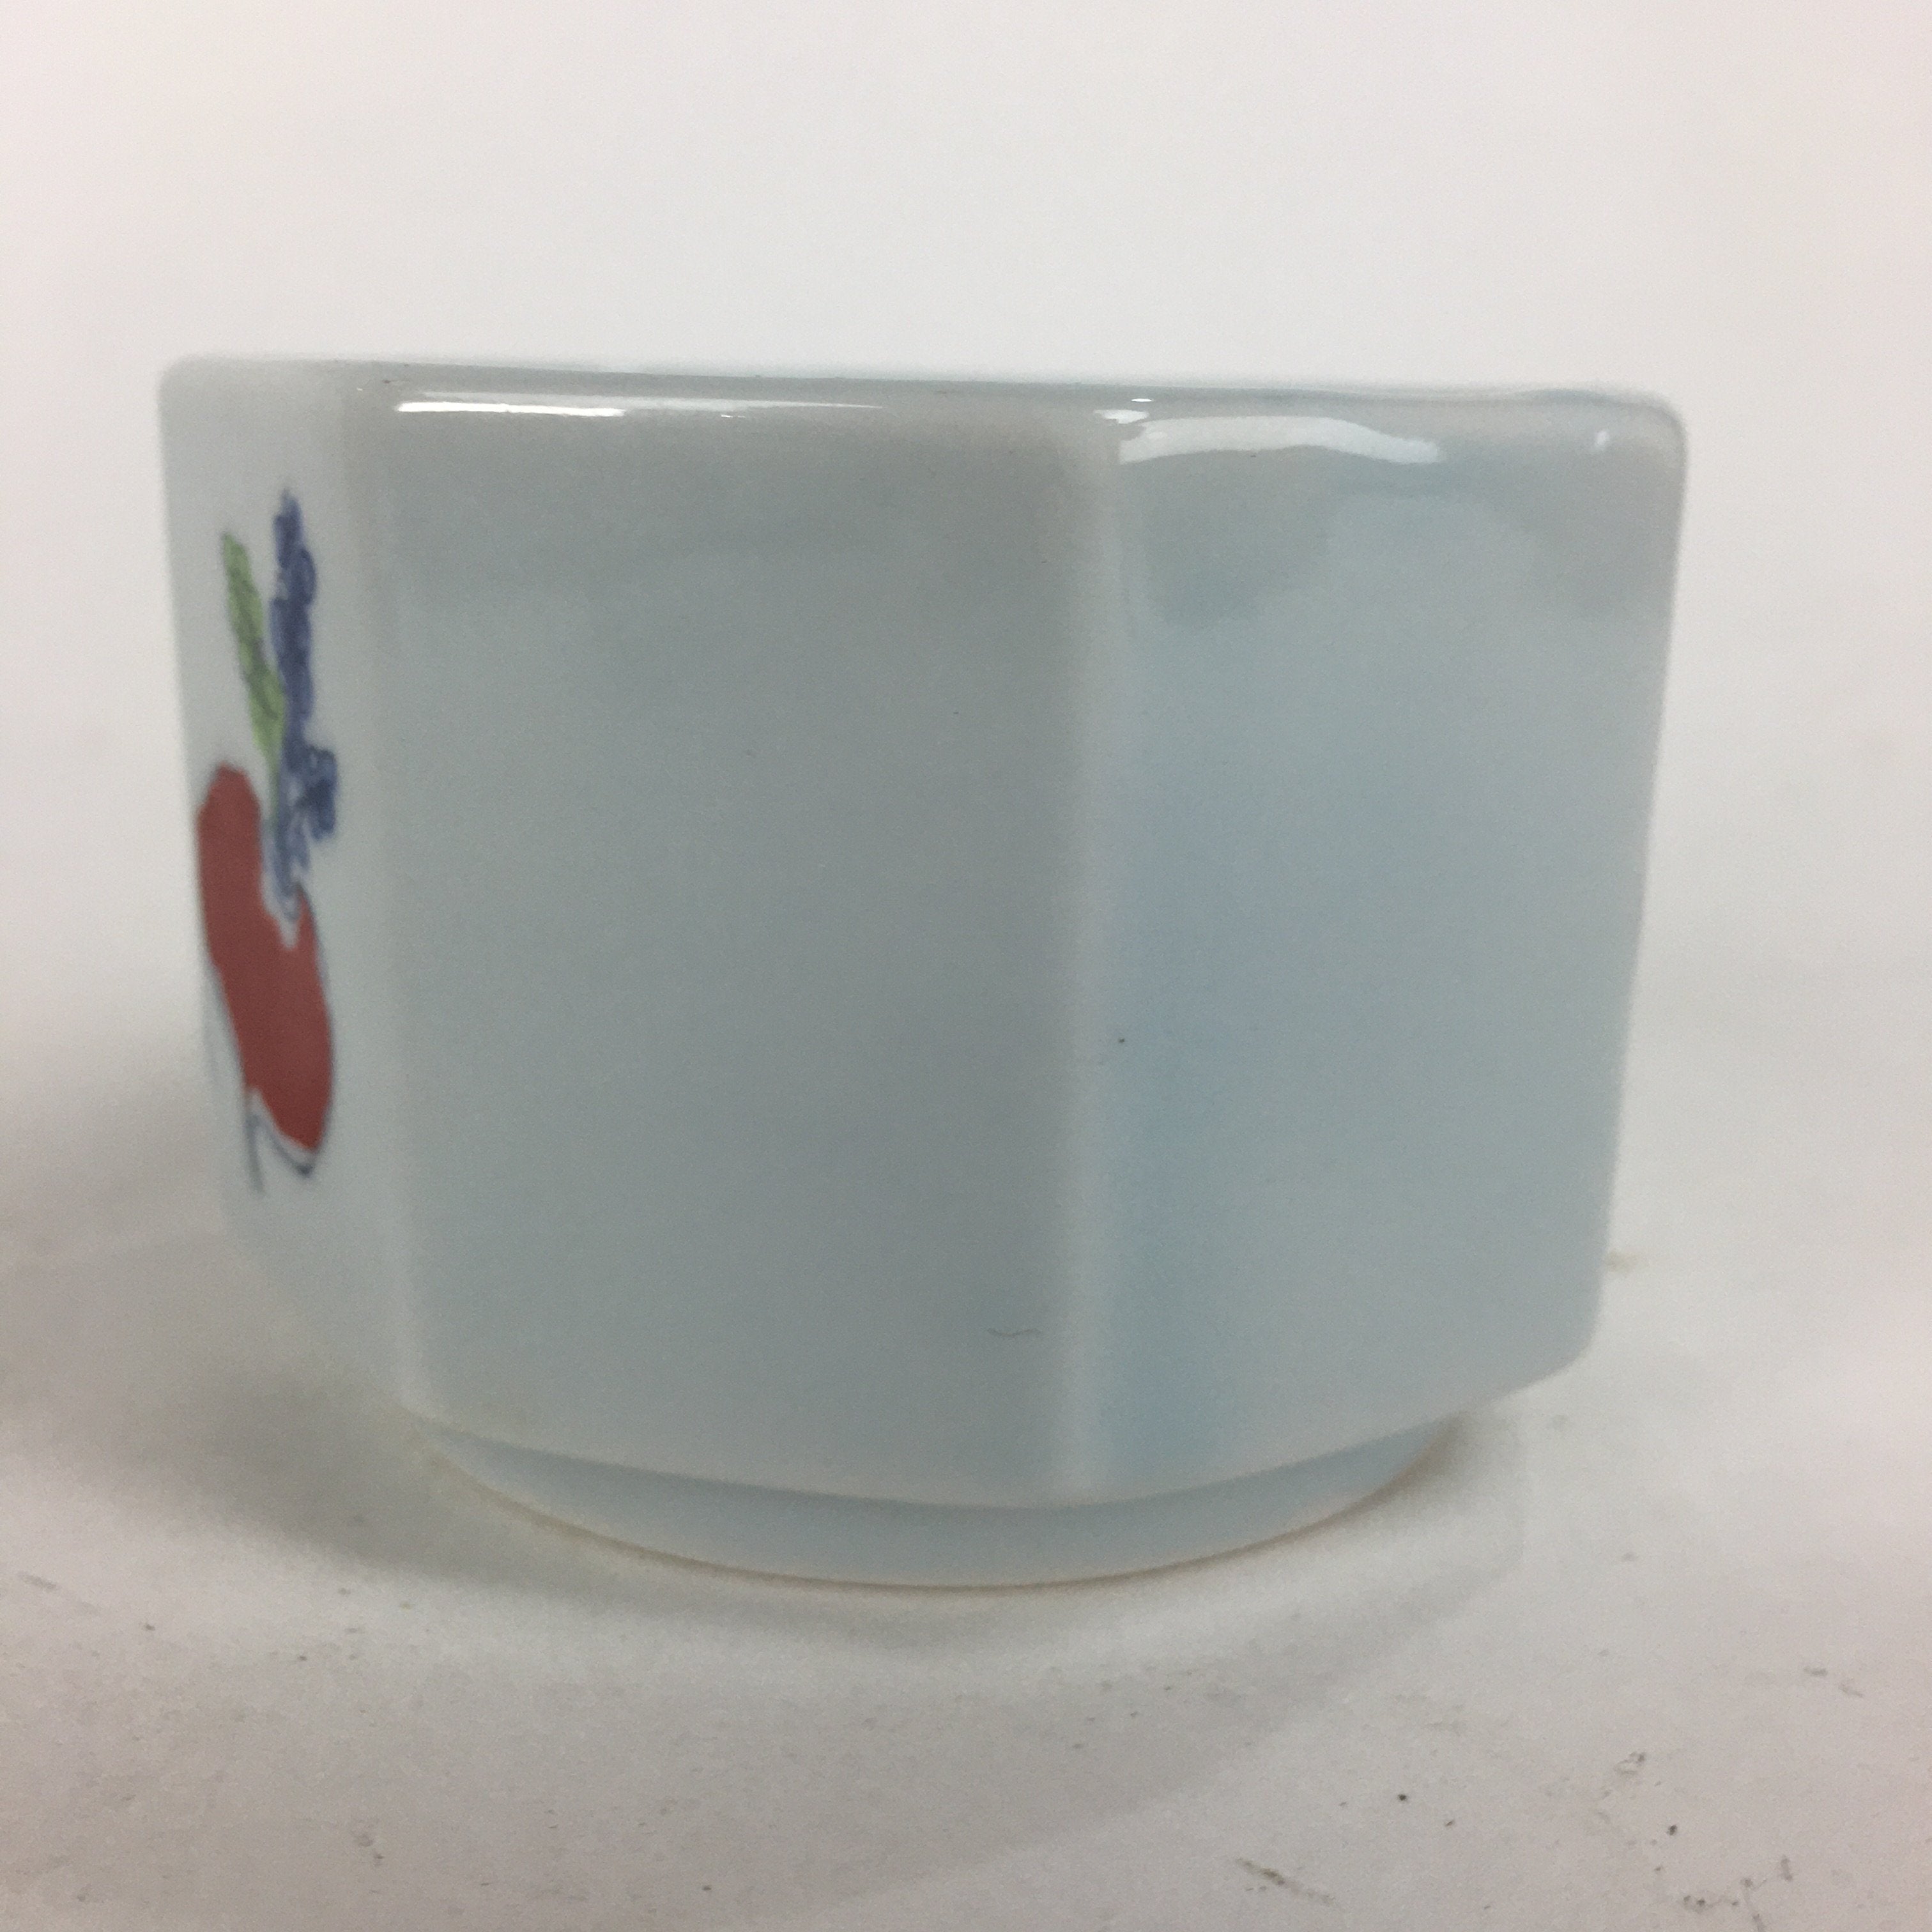 Japanese Porcelain Small Bowl Kobachi Vtg Octagon Shape Blue Red Radish PP674